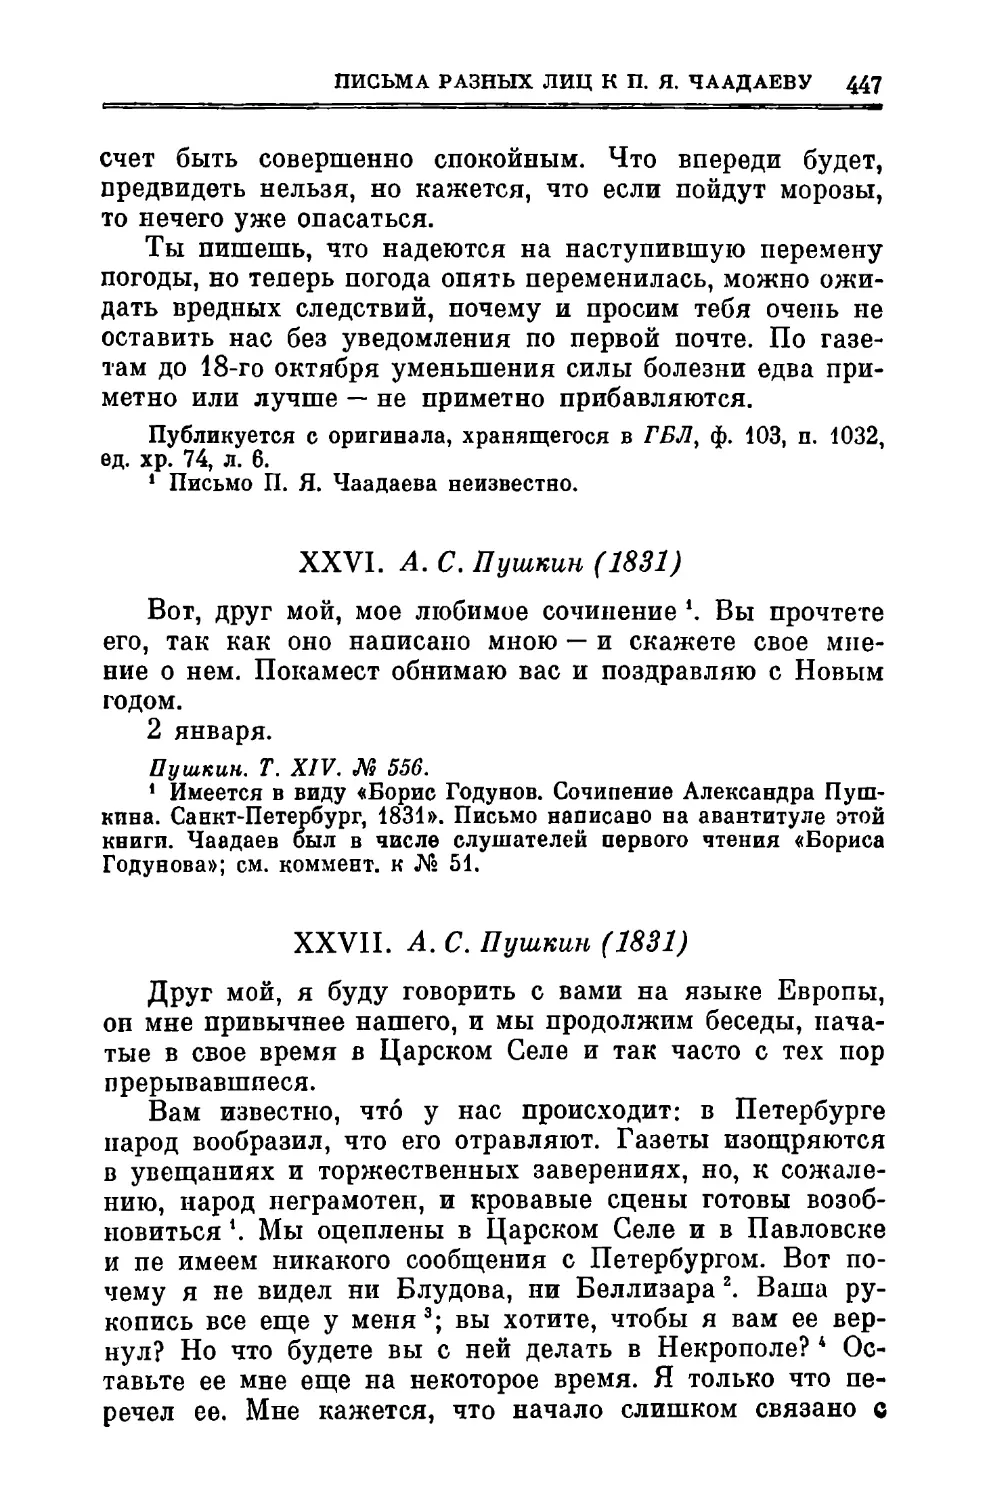 XXVI. Пушкин A.C. 1831
XXVII. Пушкин A.C. 6.VII.1831